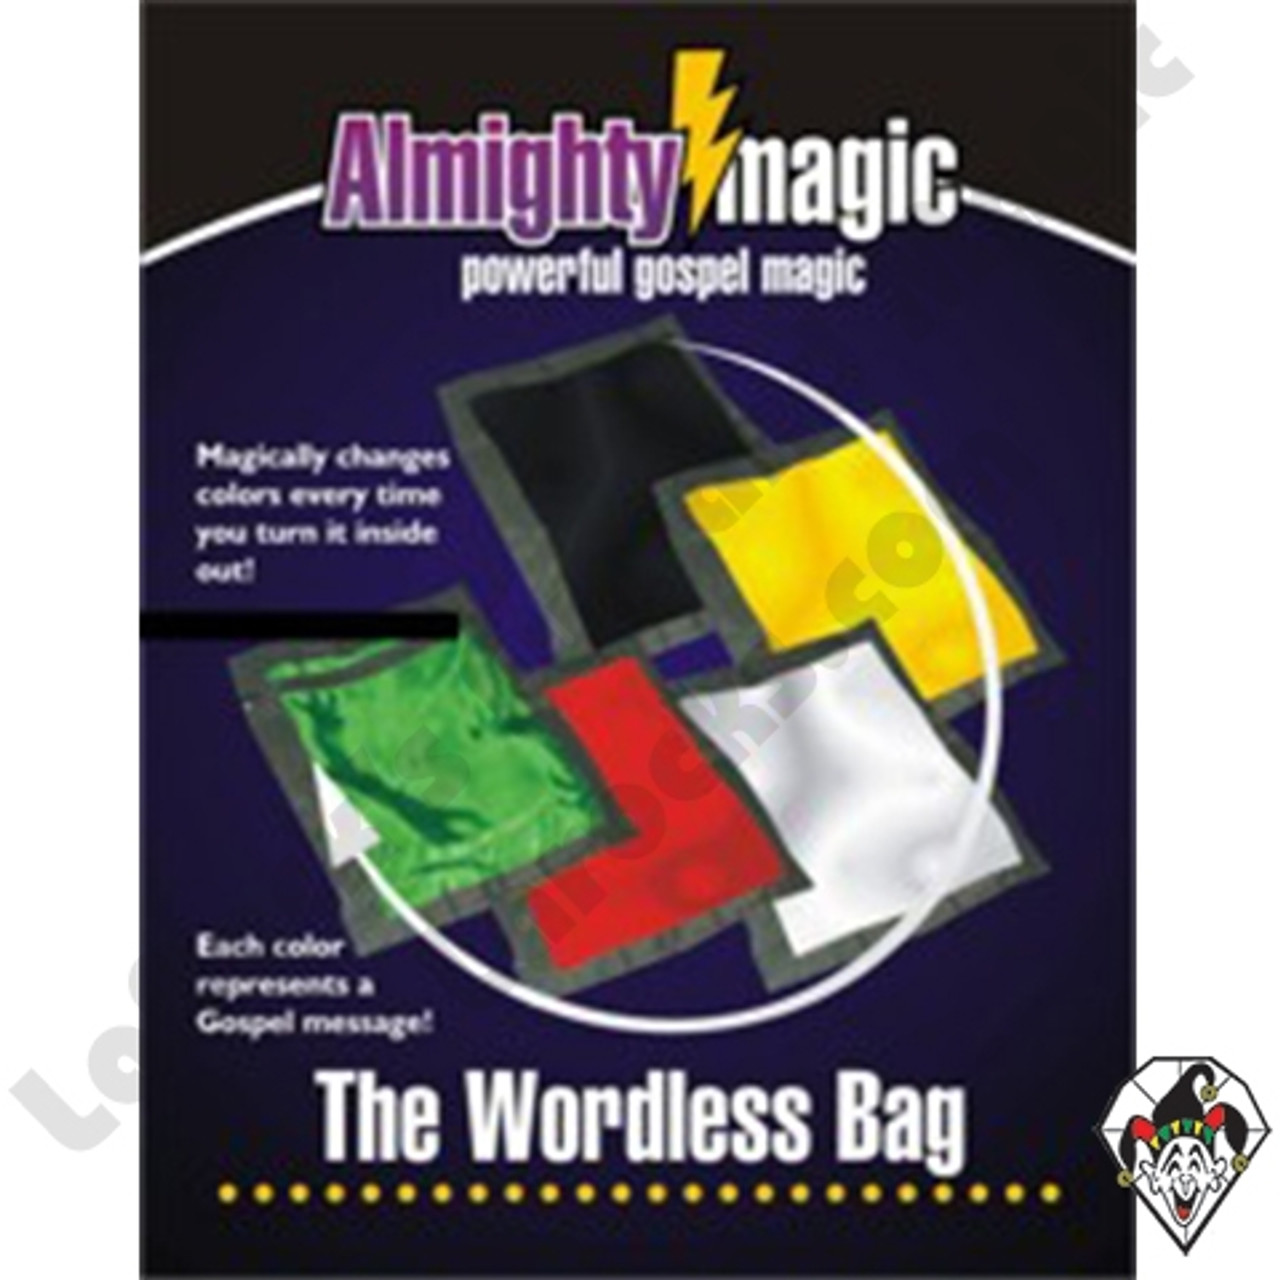 Gospel Magic Bag - Wordless Magic Bag